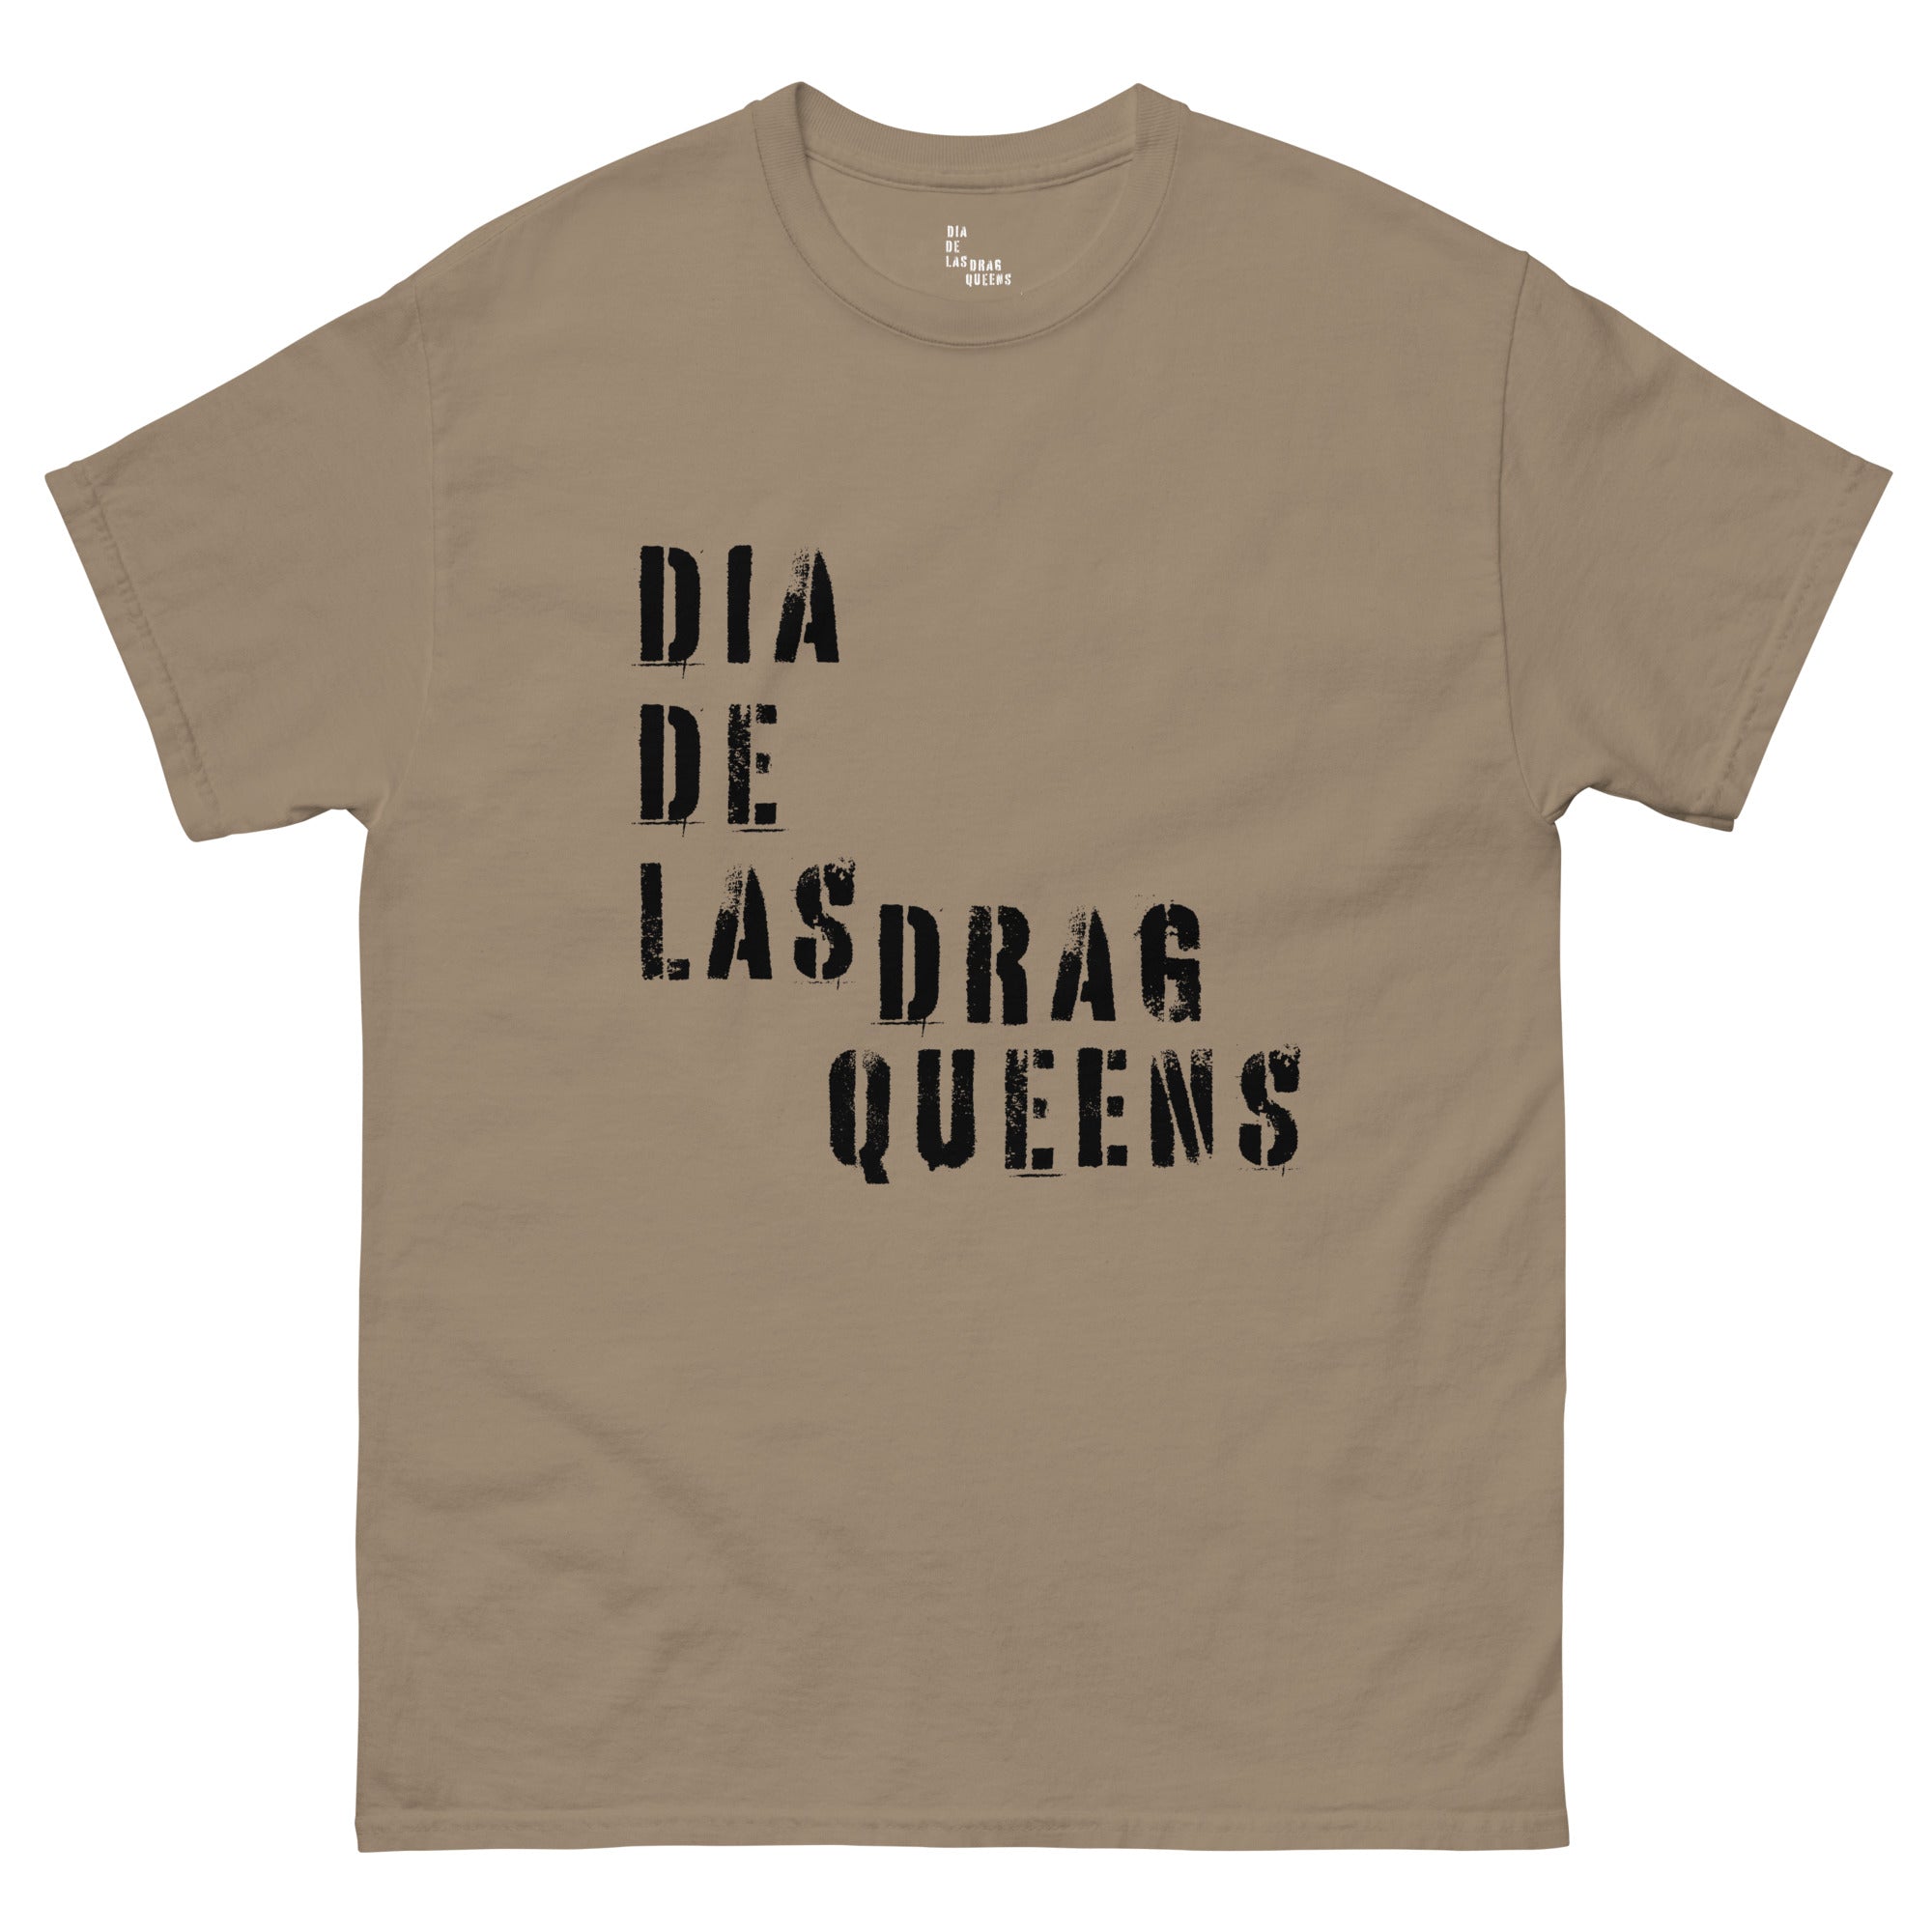 Dia De Las Drag Queens Logo 02 Classic Tee classic tee Black logo